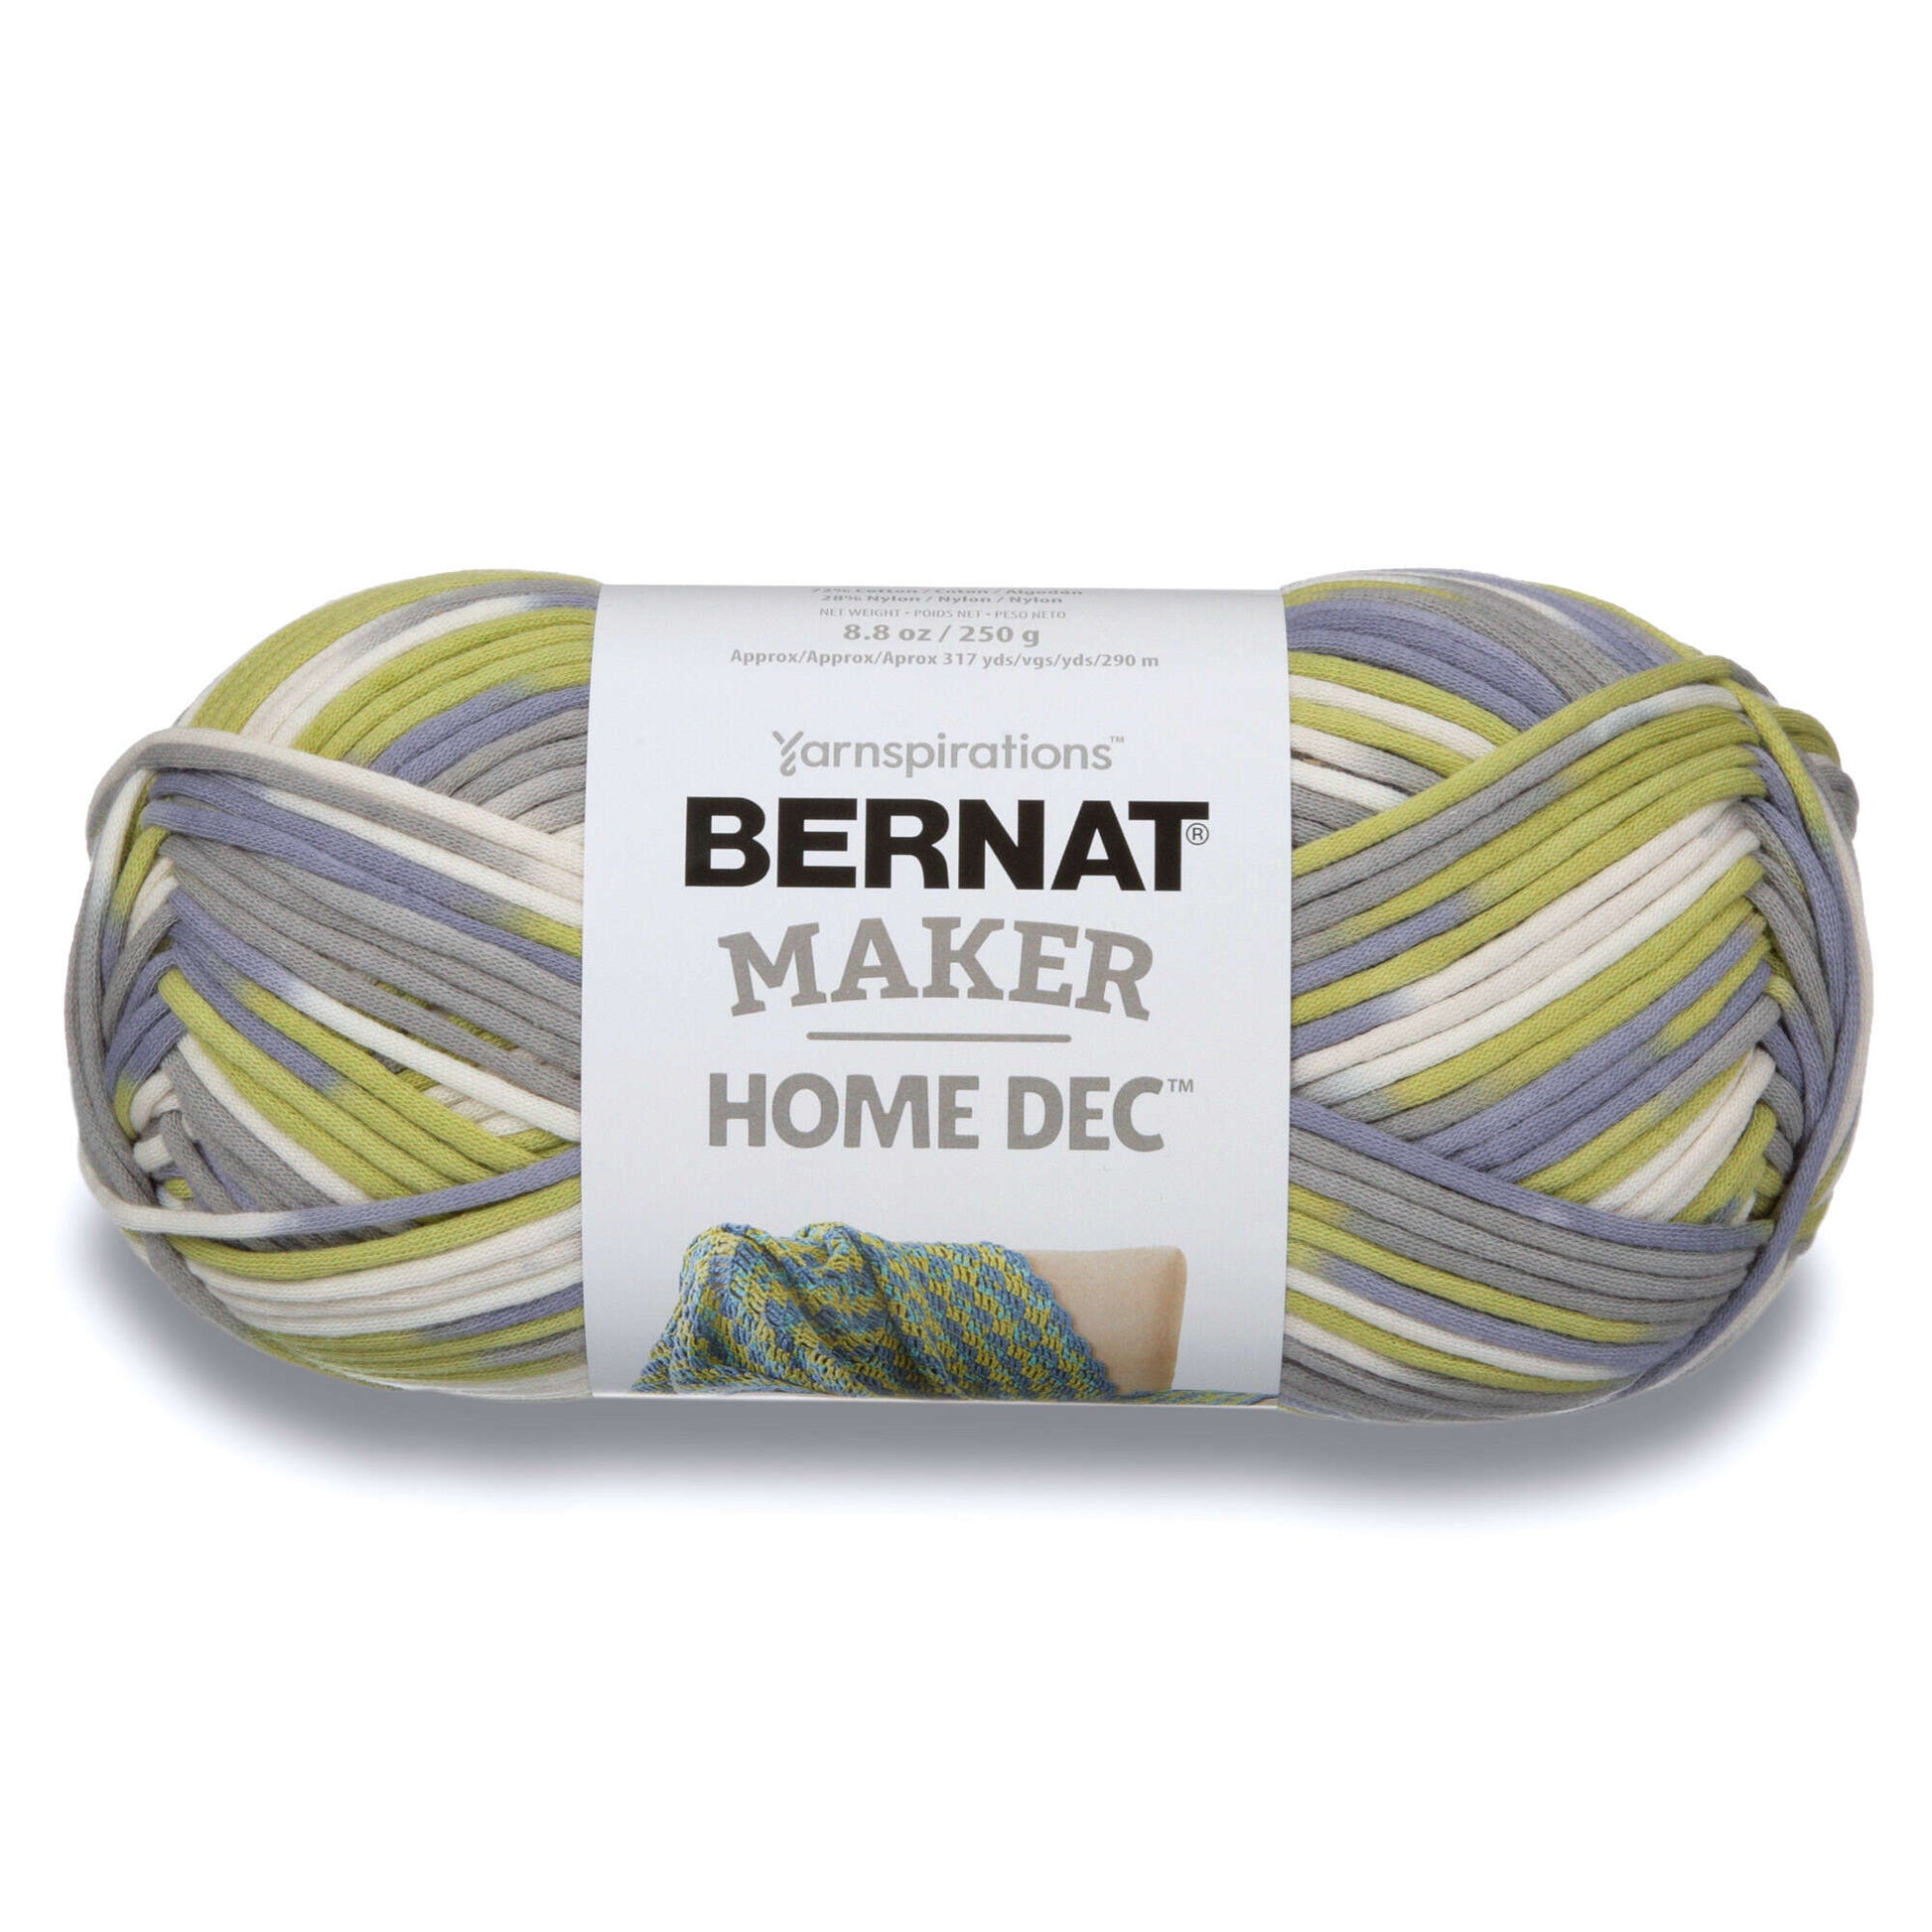 Bernat Maker Home Dec Yarn - Clearance Shades Lilac Fence Varg